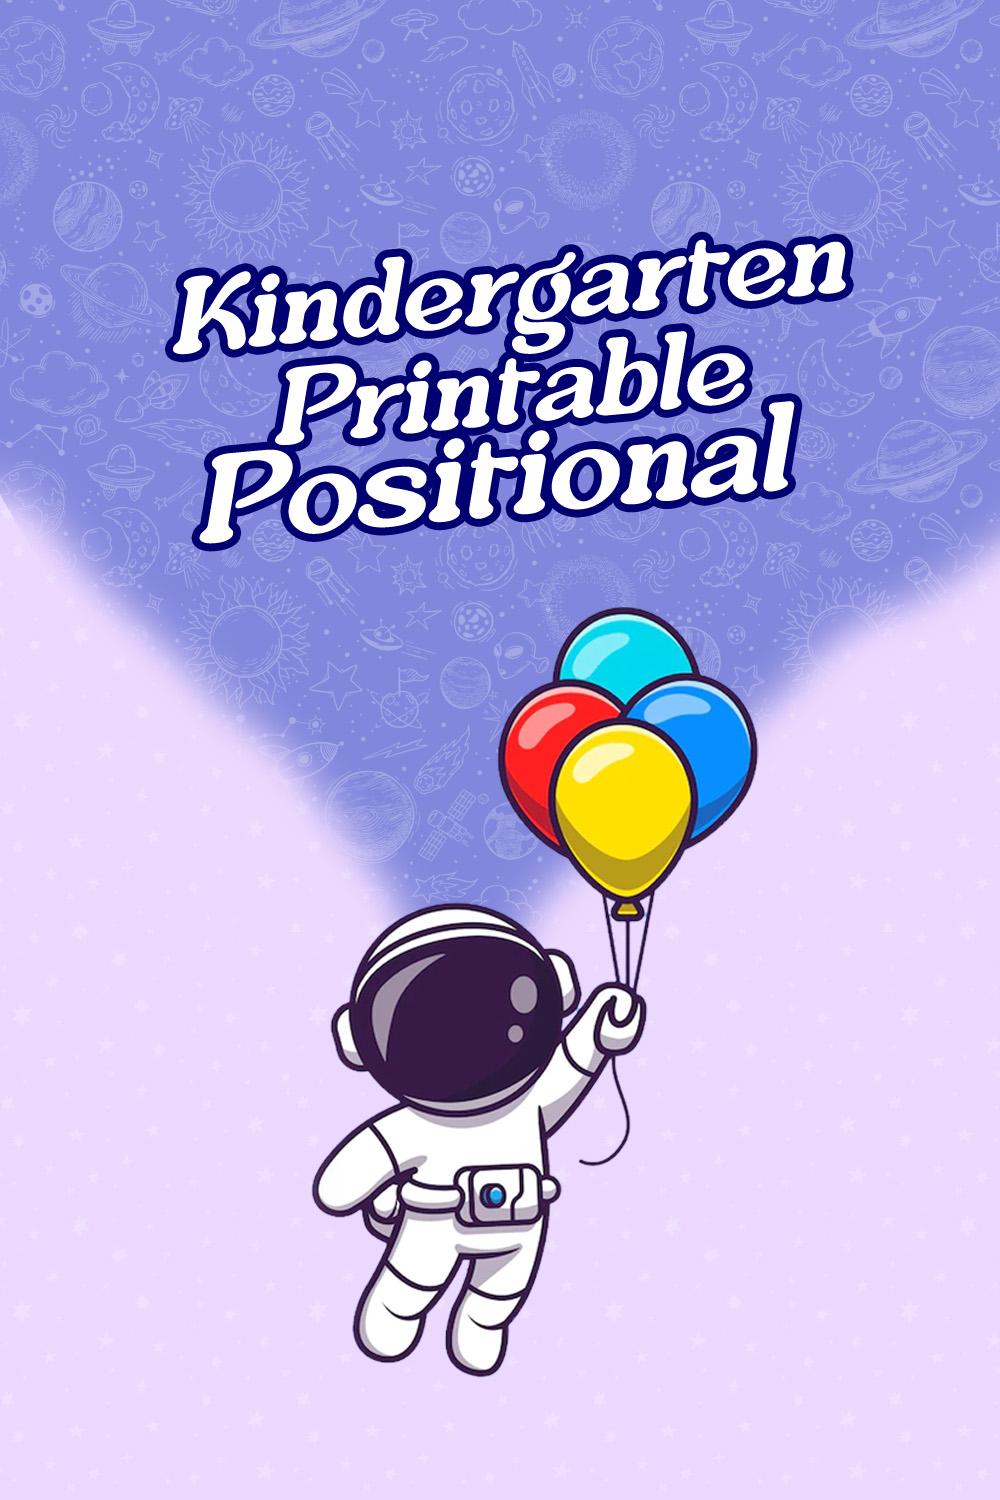 16 Images of Kindergarten Printable Positional Worksheet